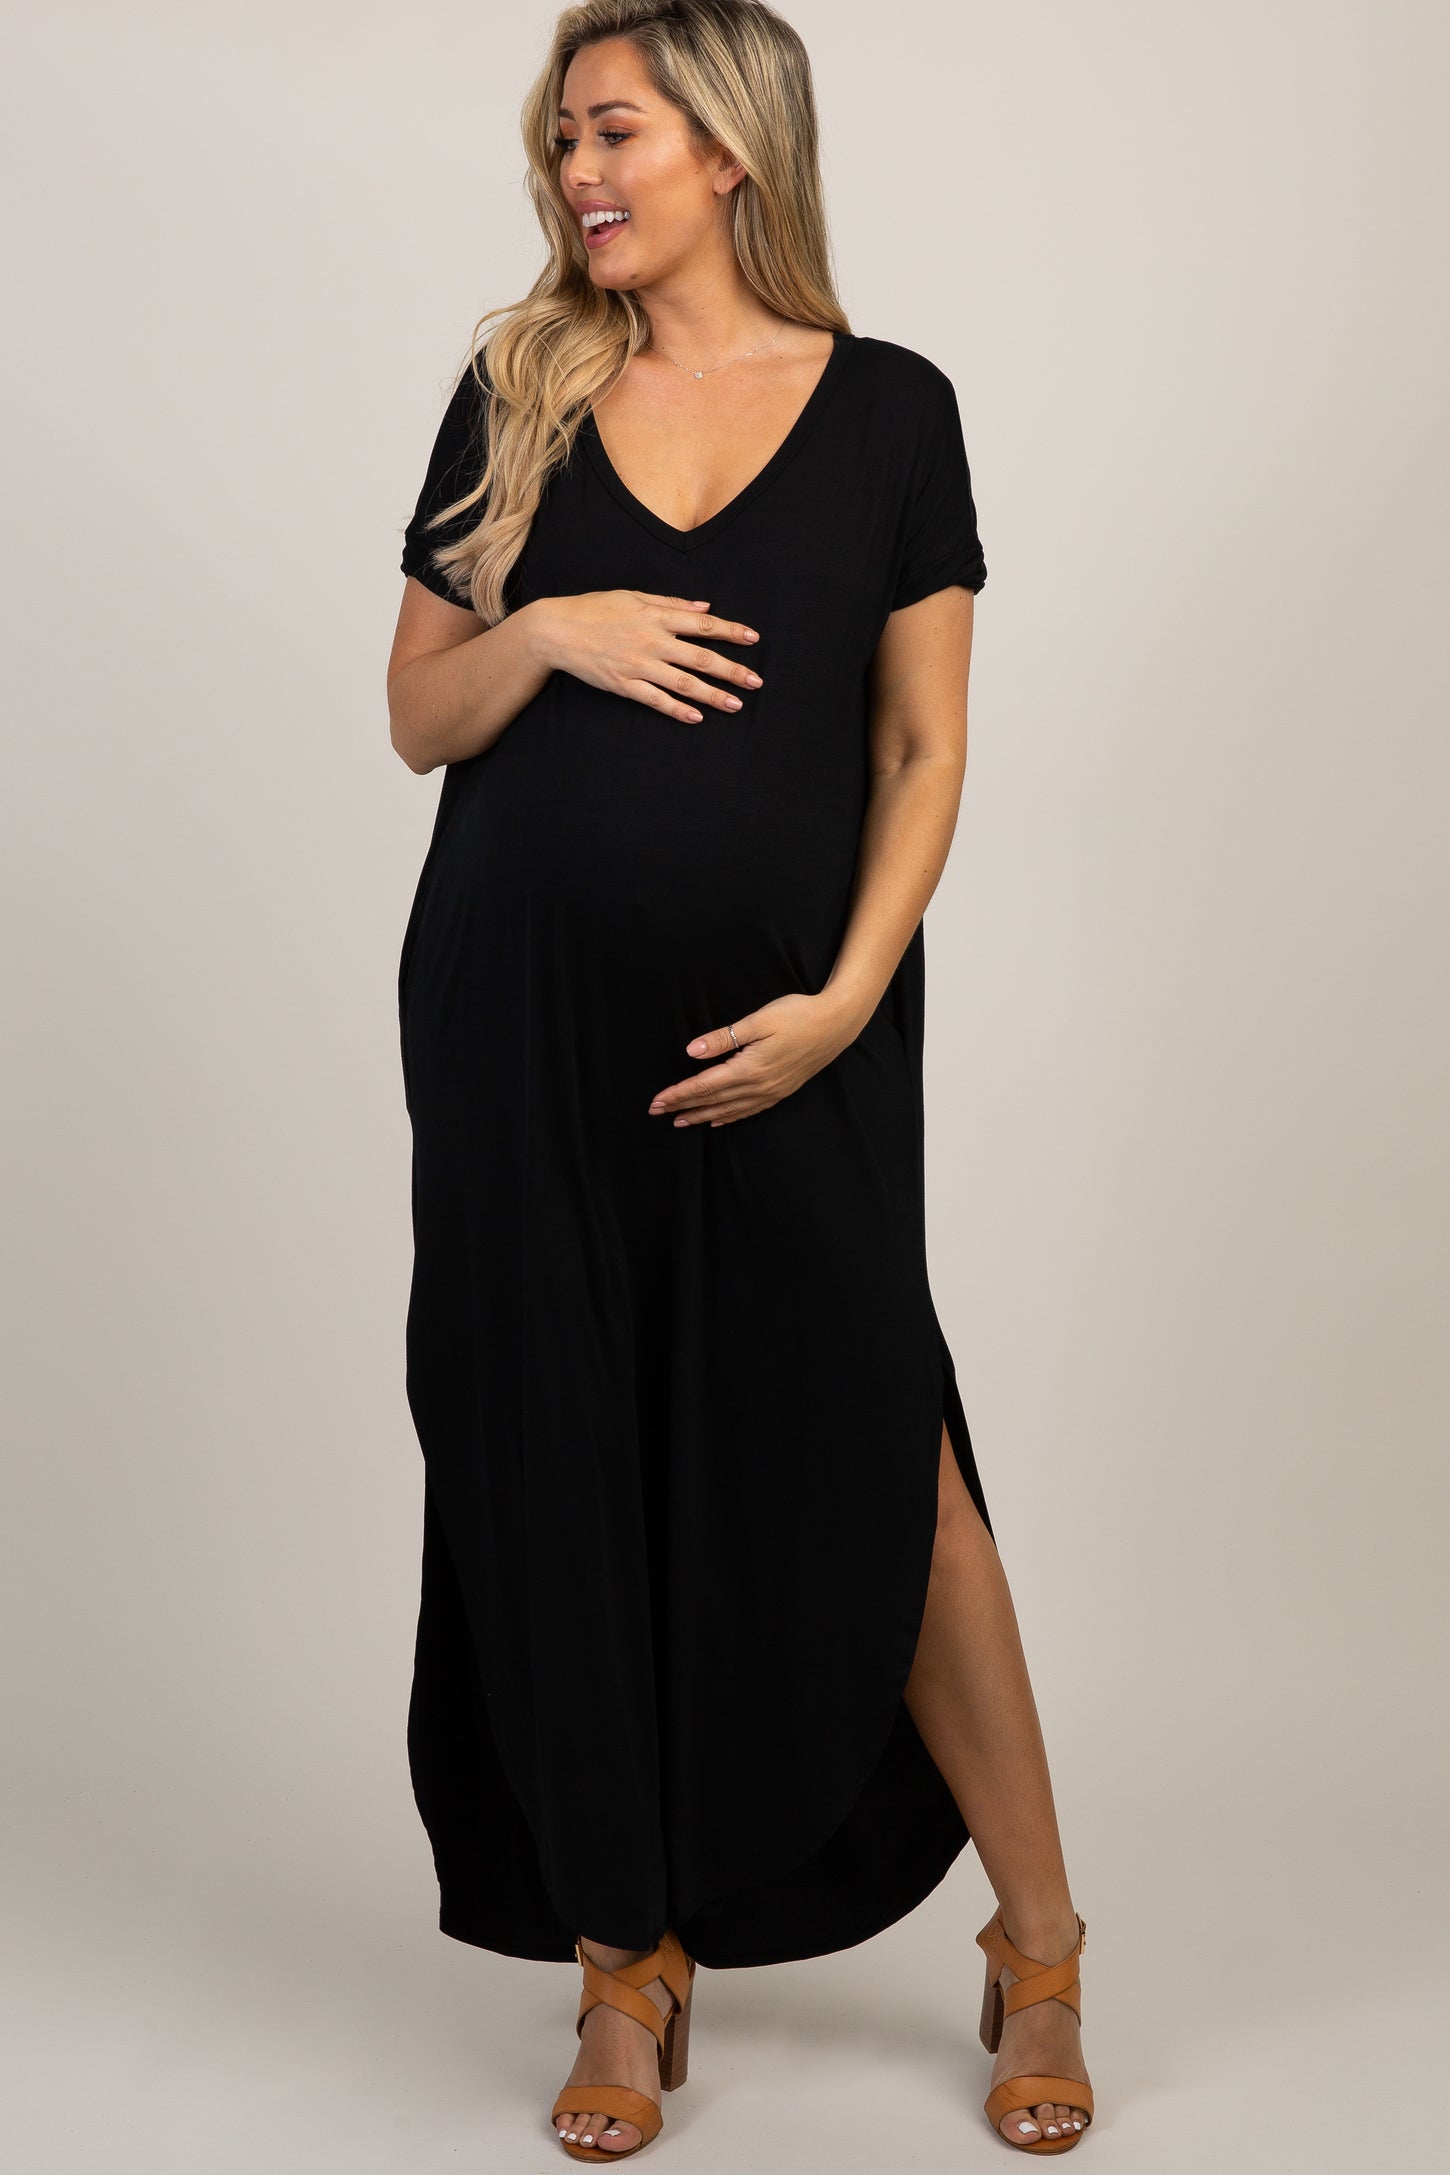 PinkBlush Black Solid Short Sleeve Maternity Maxi Dress